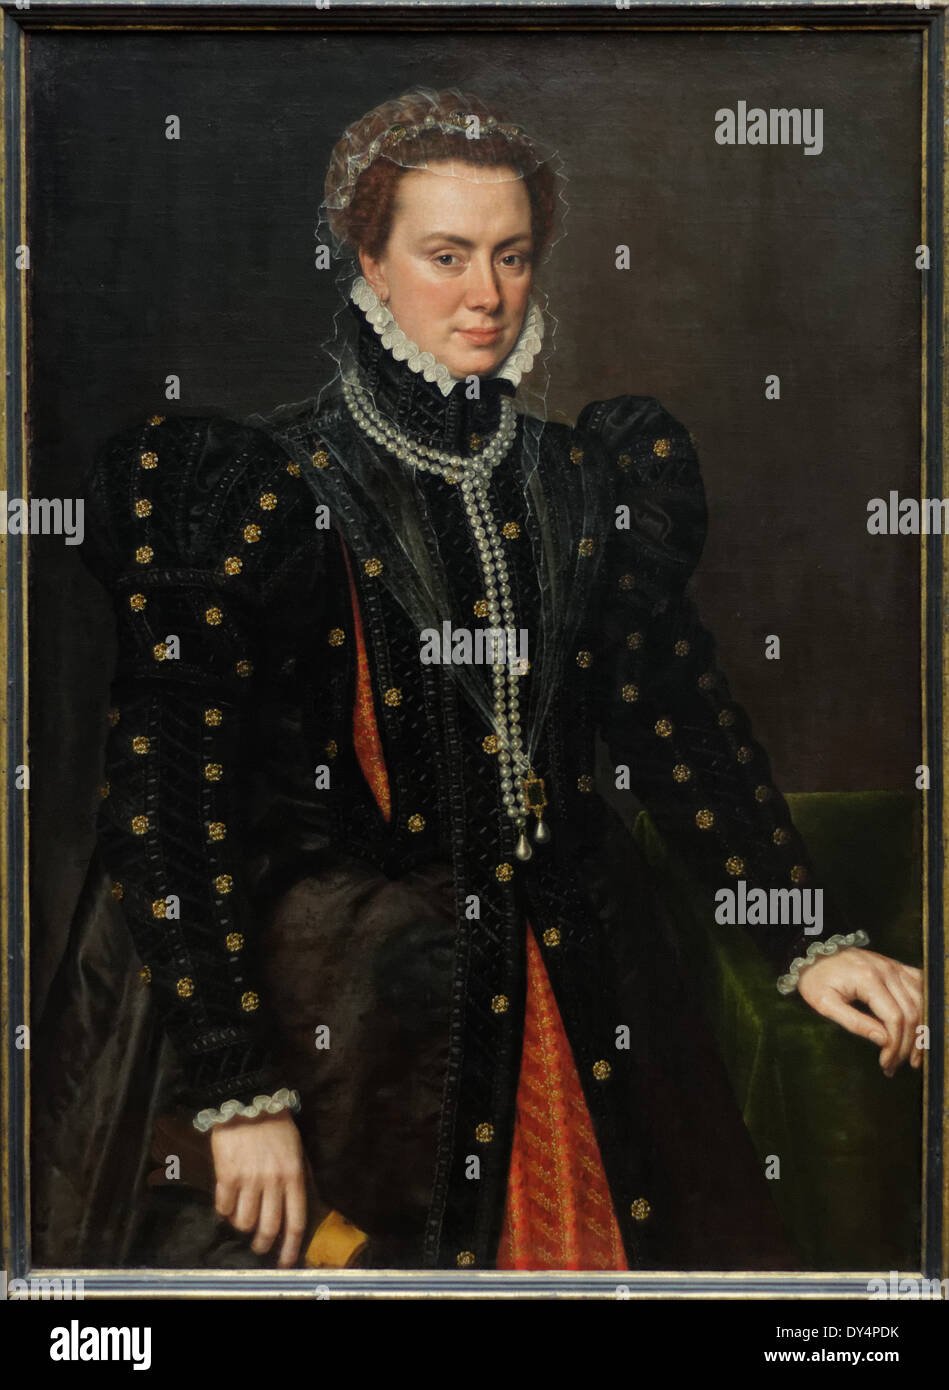 Anthonis Mor - Duchess Margaret of Parma - 1562 - XVI th Century - Flemish School - Gemäldegalerie - Berlin Stock Photo